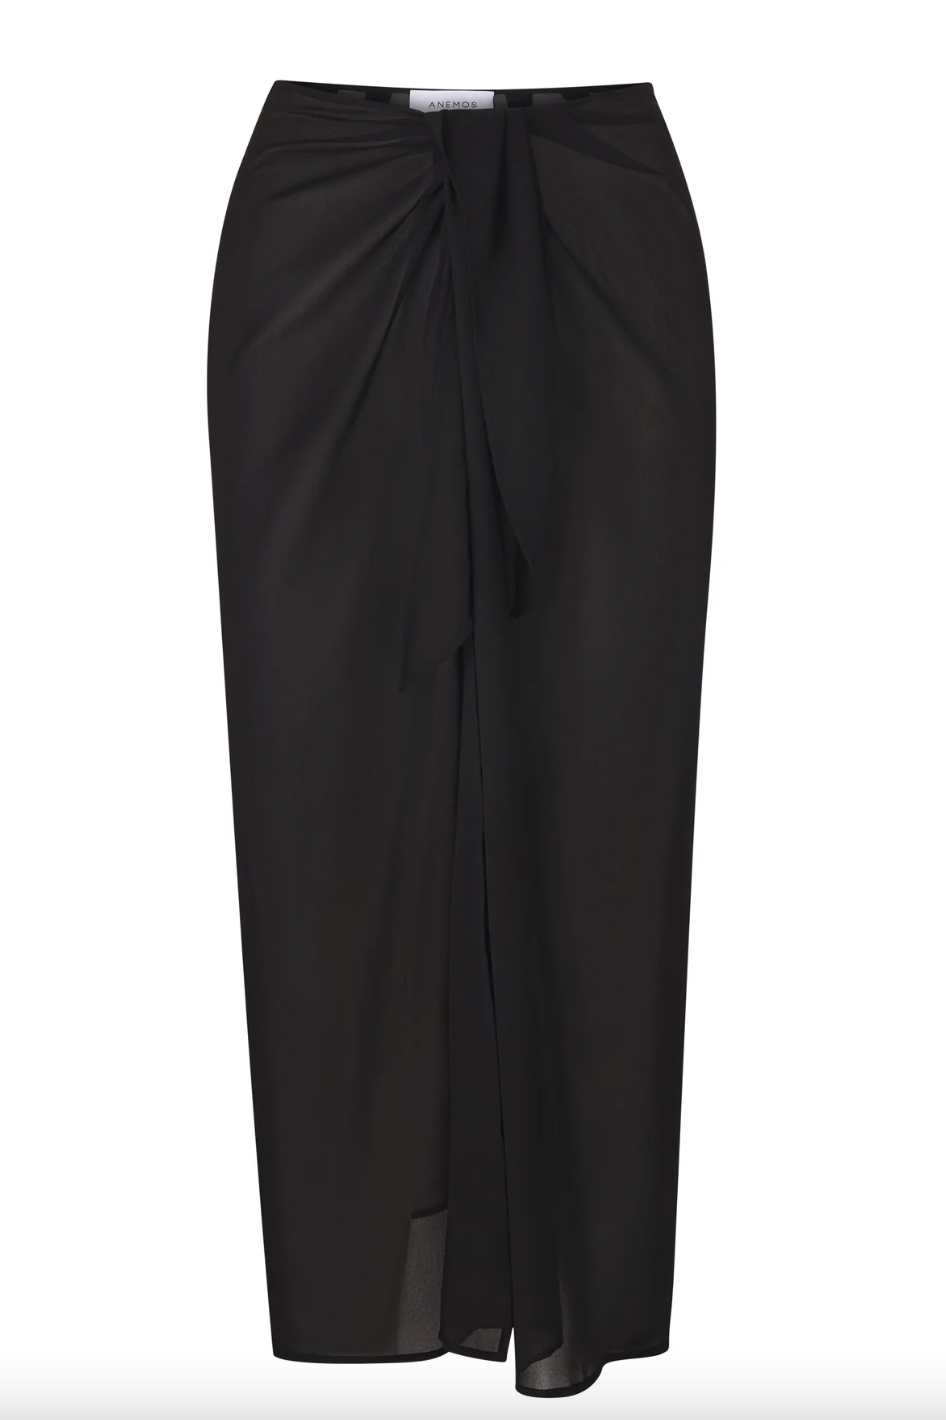 Product Image for The Wrap Midi Skirt, Sheer Eco-Chiffon, Black